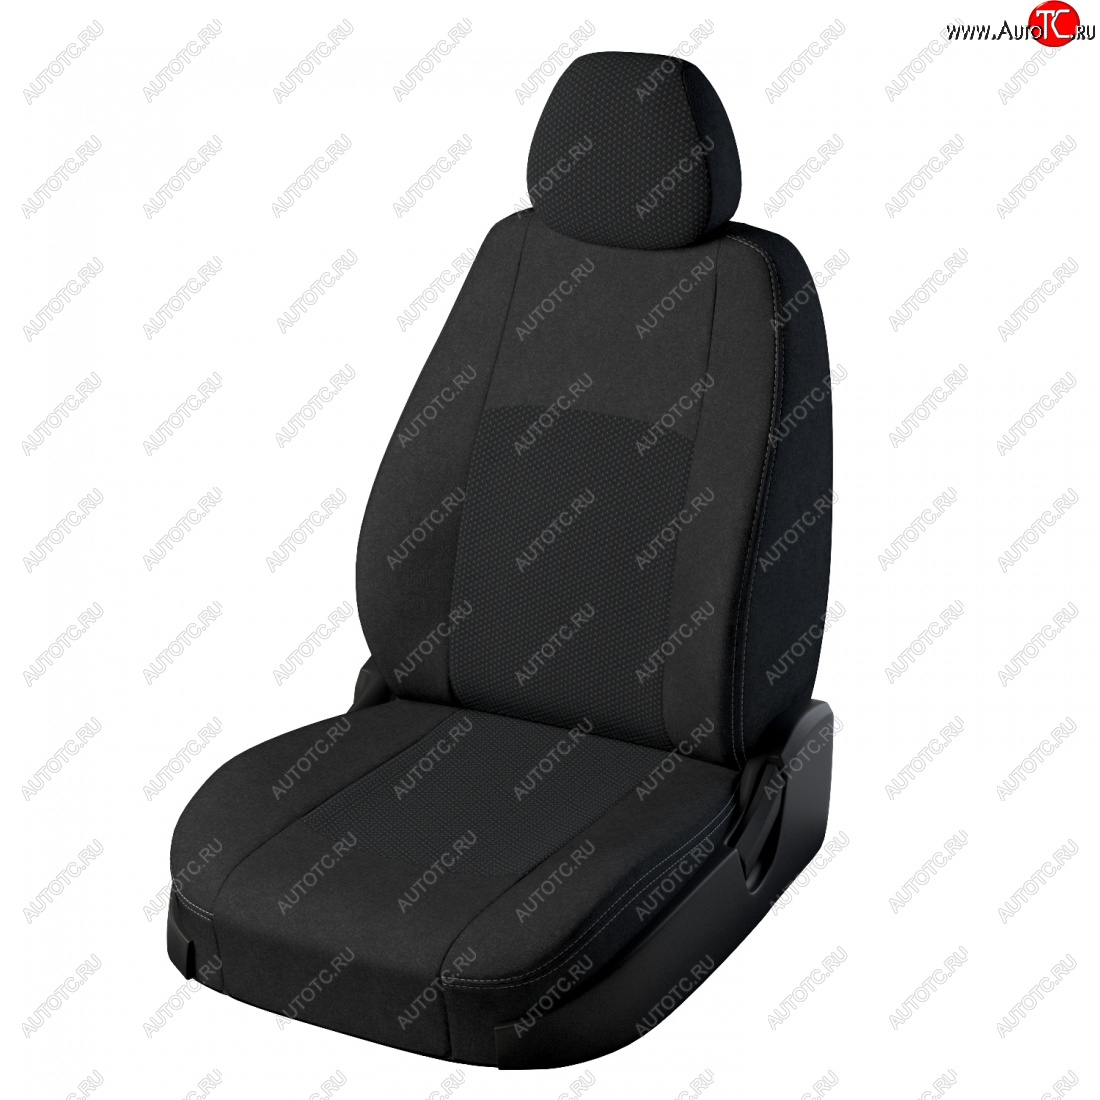 6 399 р. Чехлы для сидений Lord Autofashion Турин (жаккард, 40/60)  Nissan Almera  седан (2012-2019) (Чёрный, вставка Эльбрус)